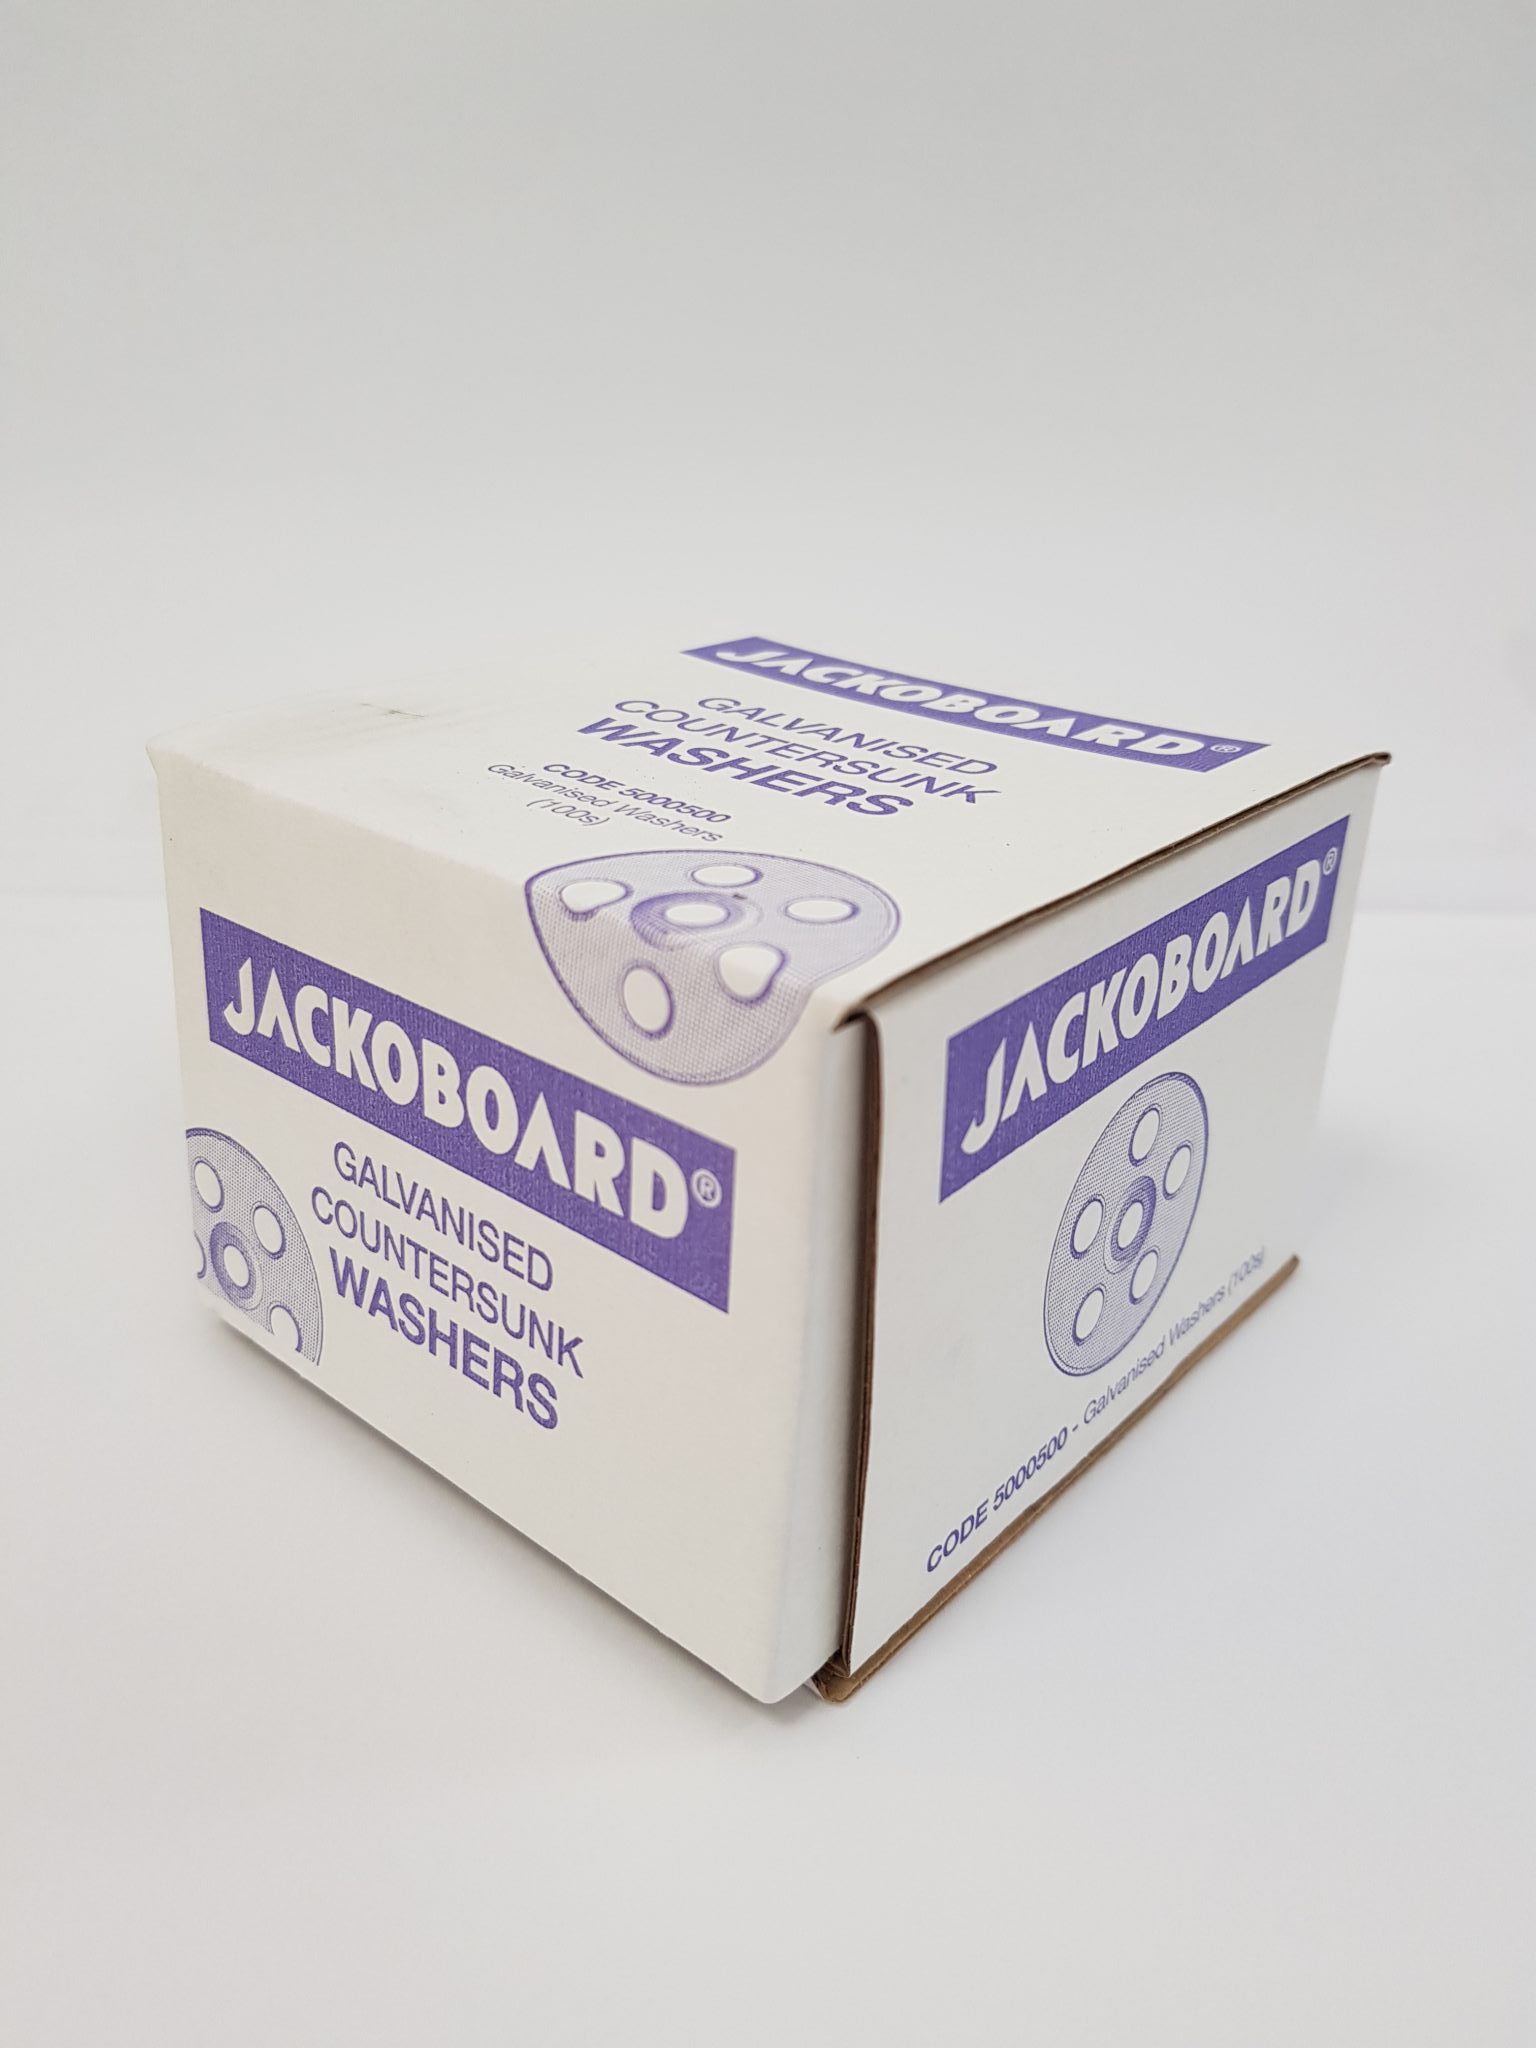 Jackoboard 36mm Galvanised Washer Fixings